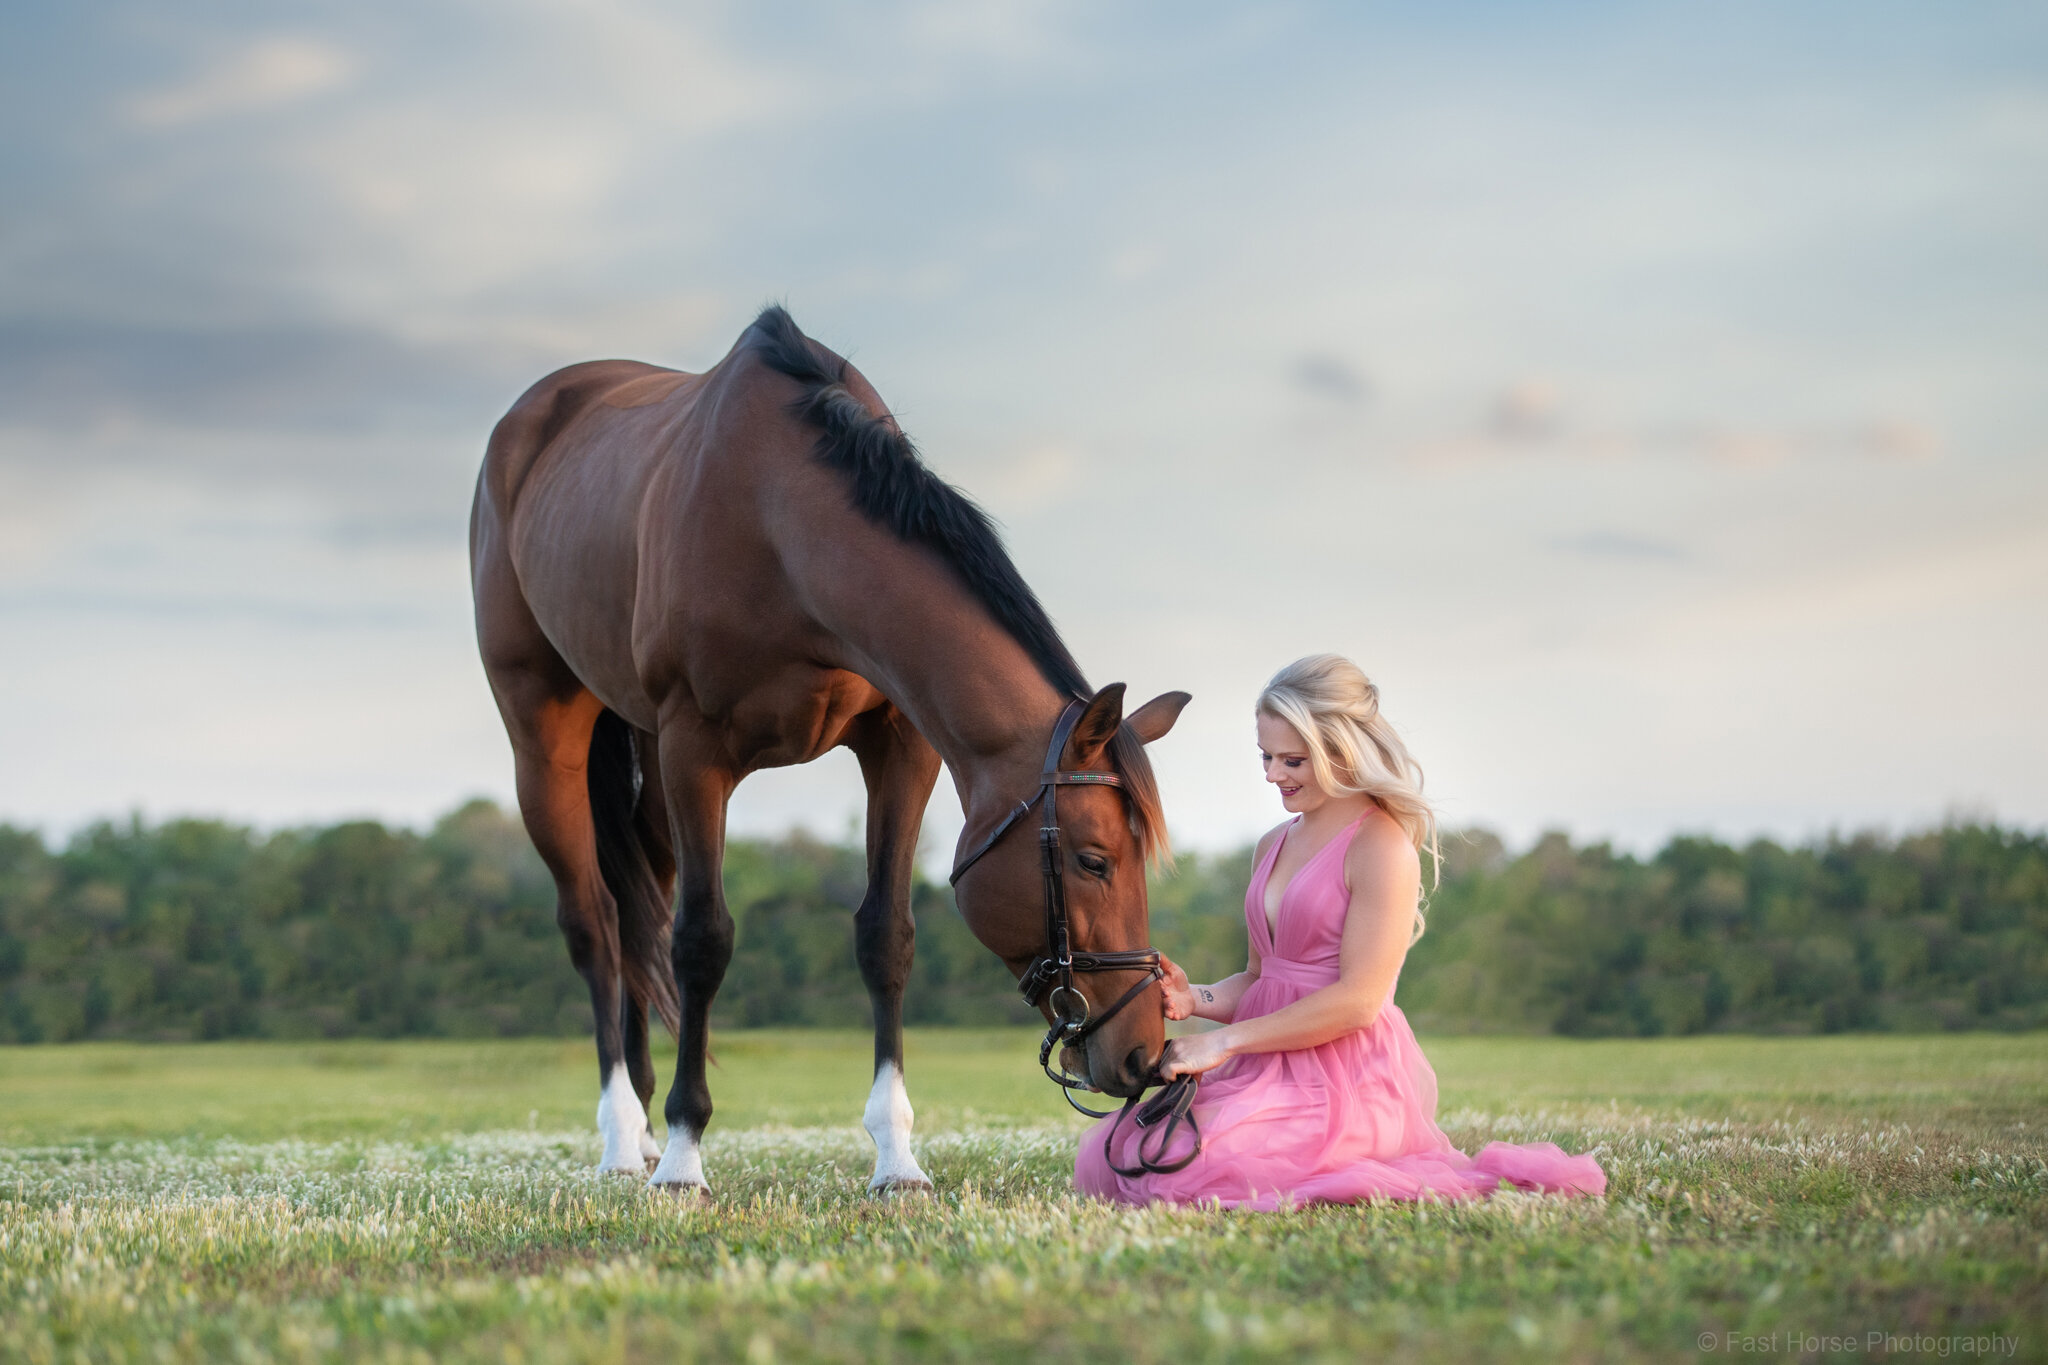 Fast Horse Photography_Stephanie Watko-4.jpg